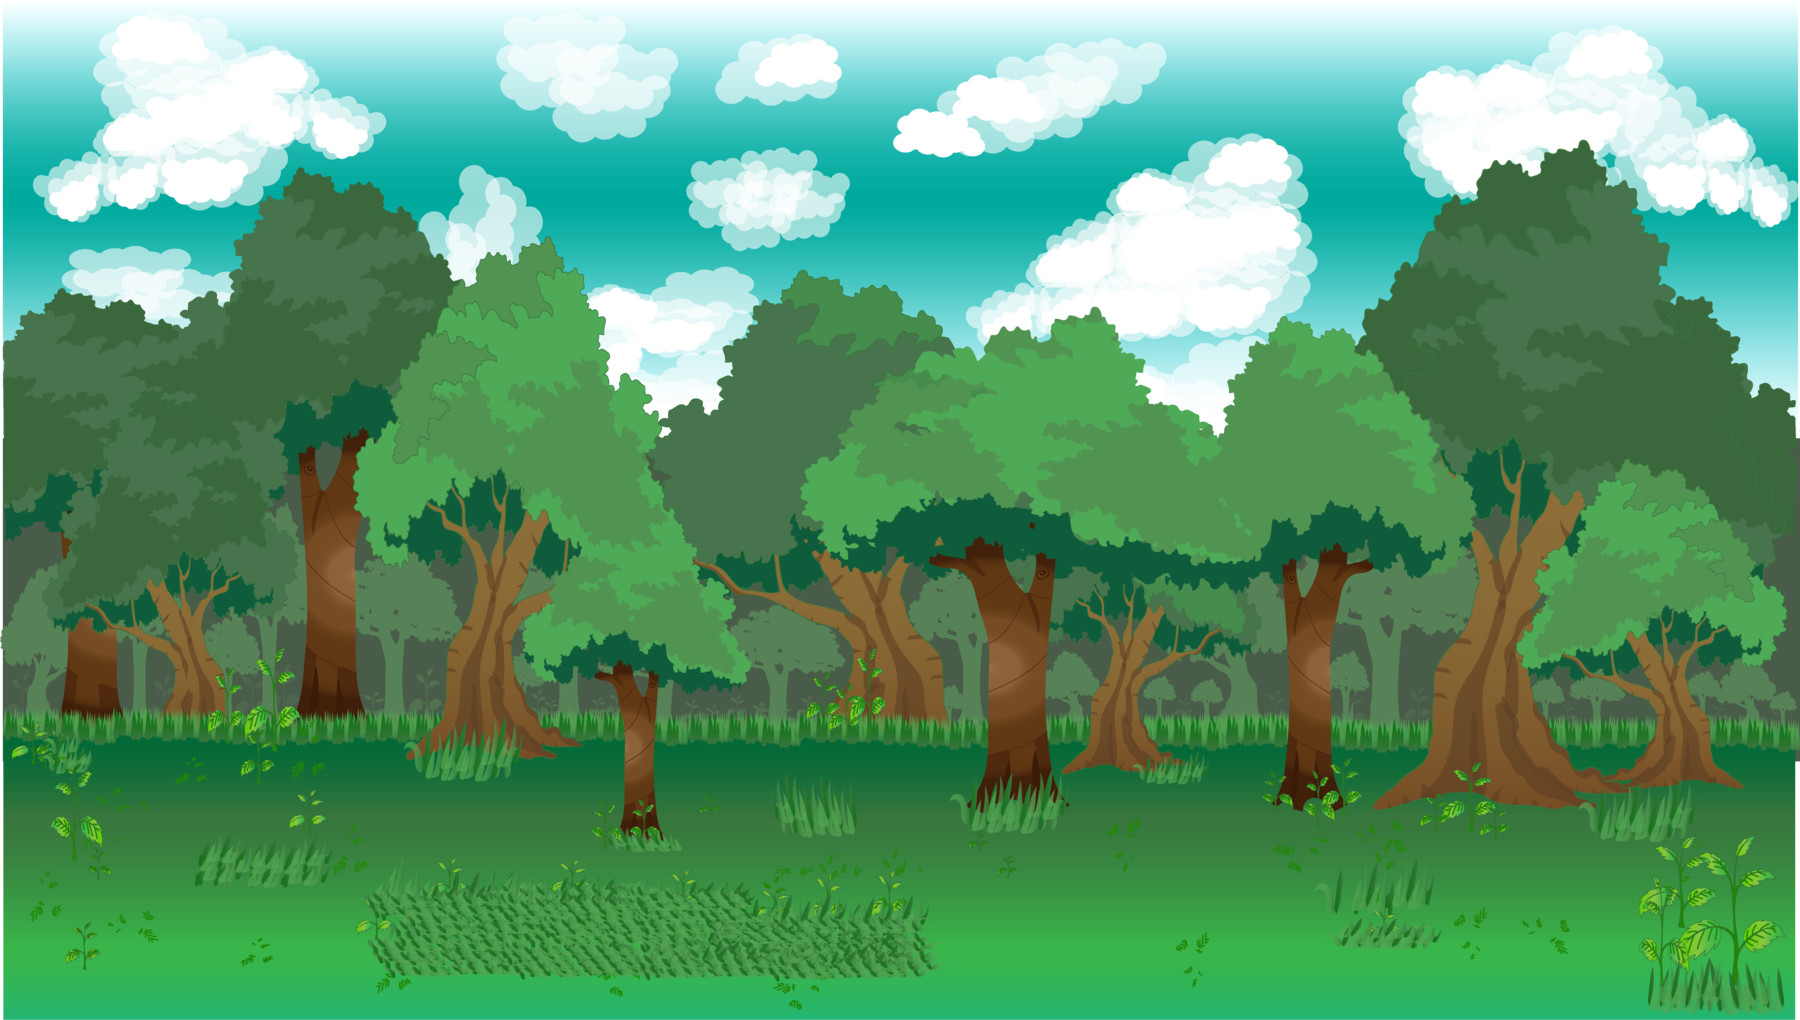 ArtStation - Background for game 2d - Forestry